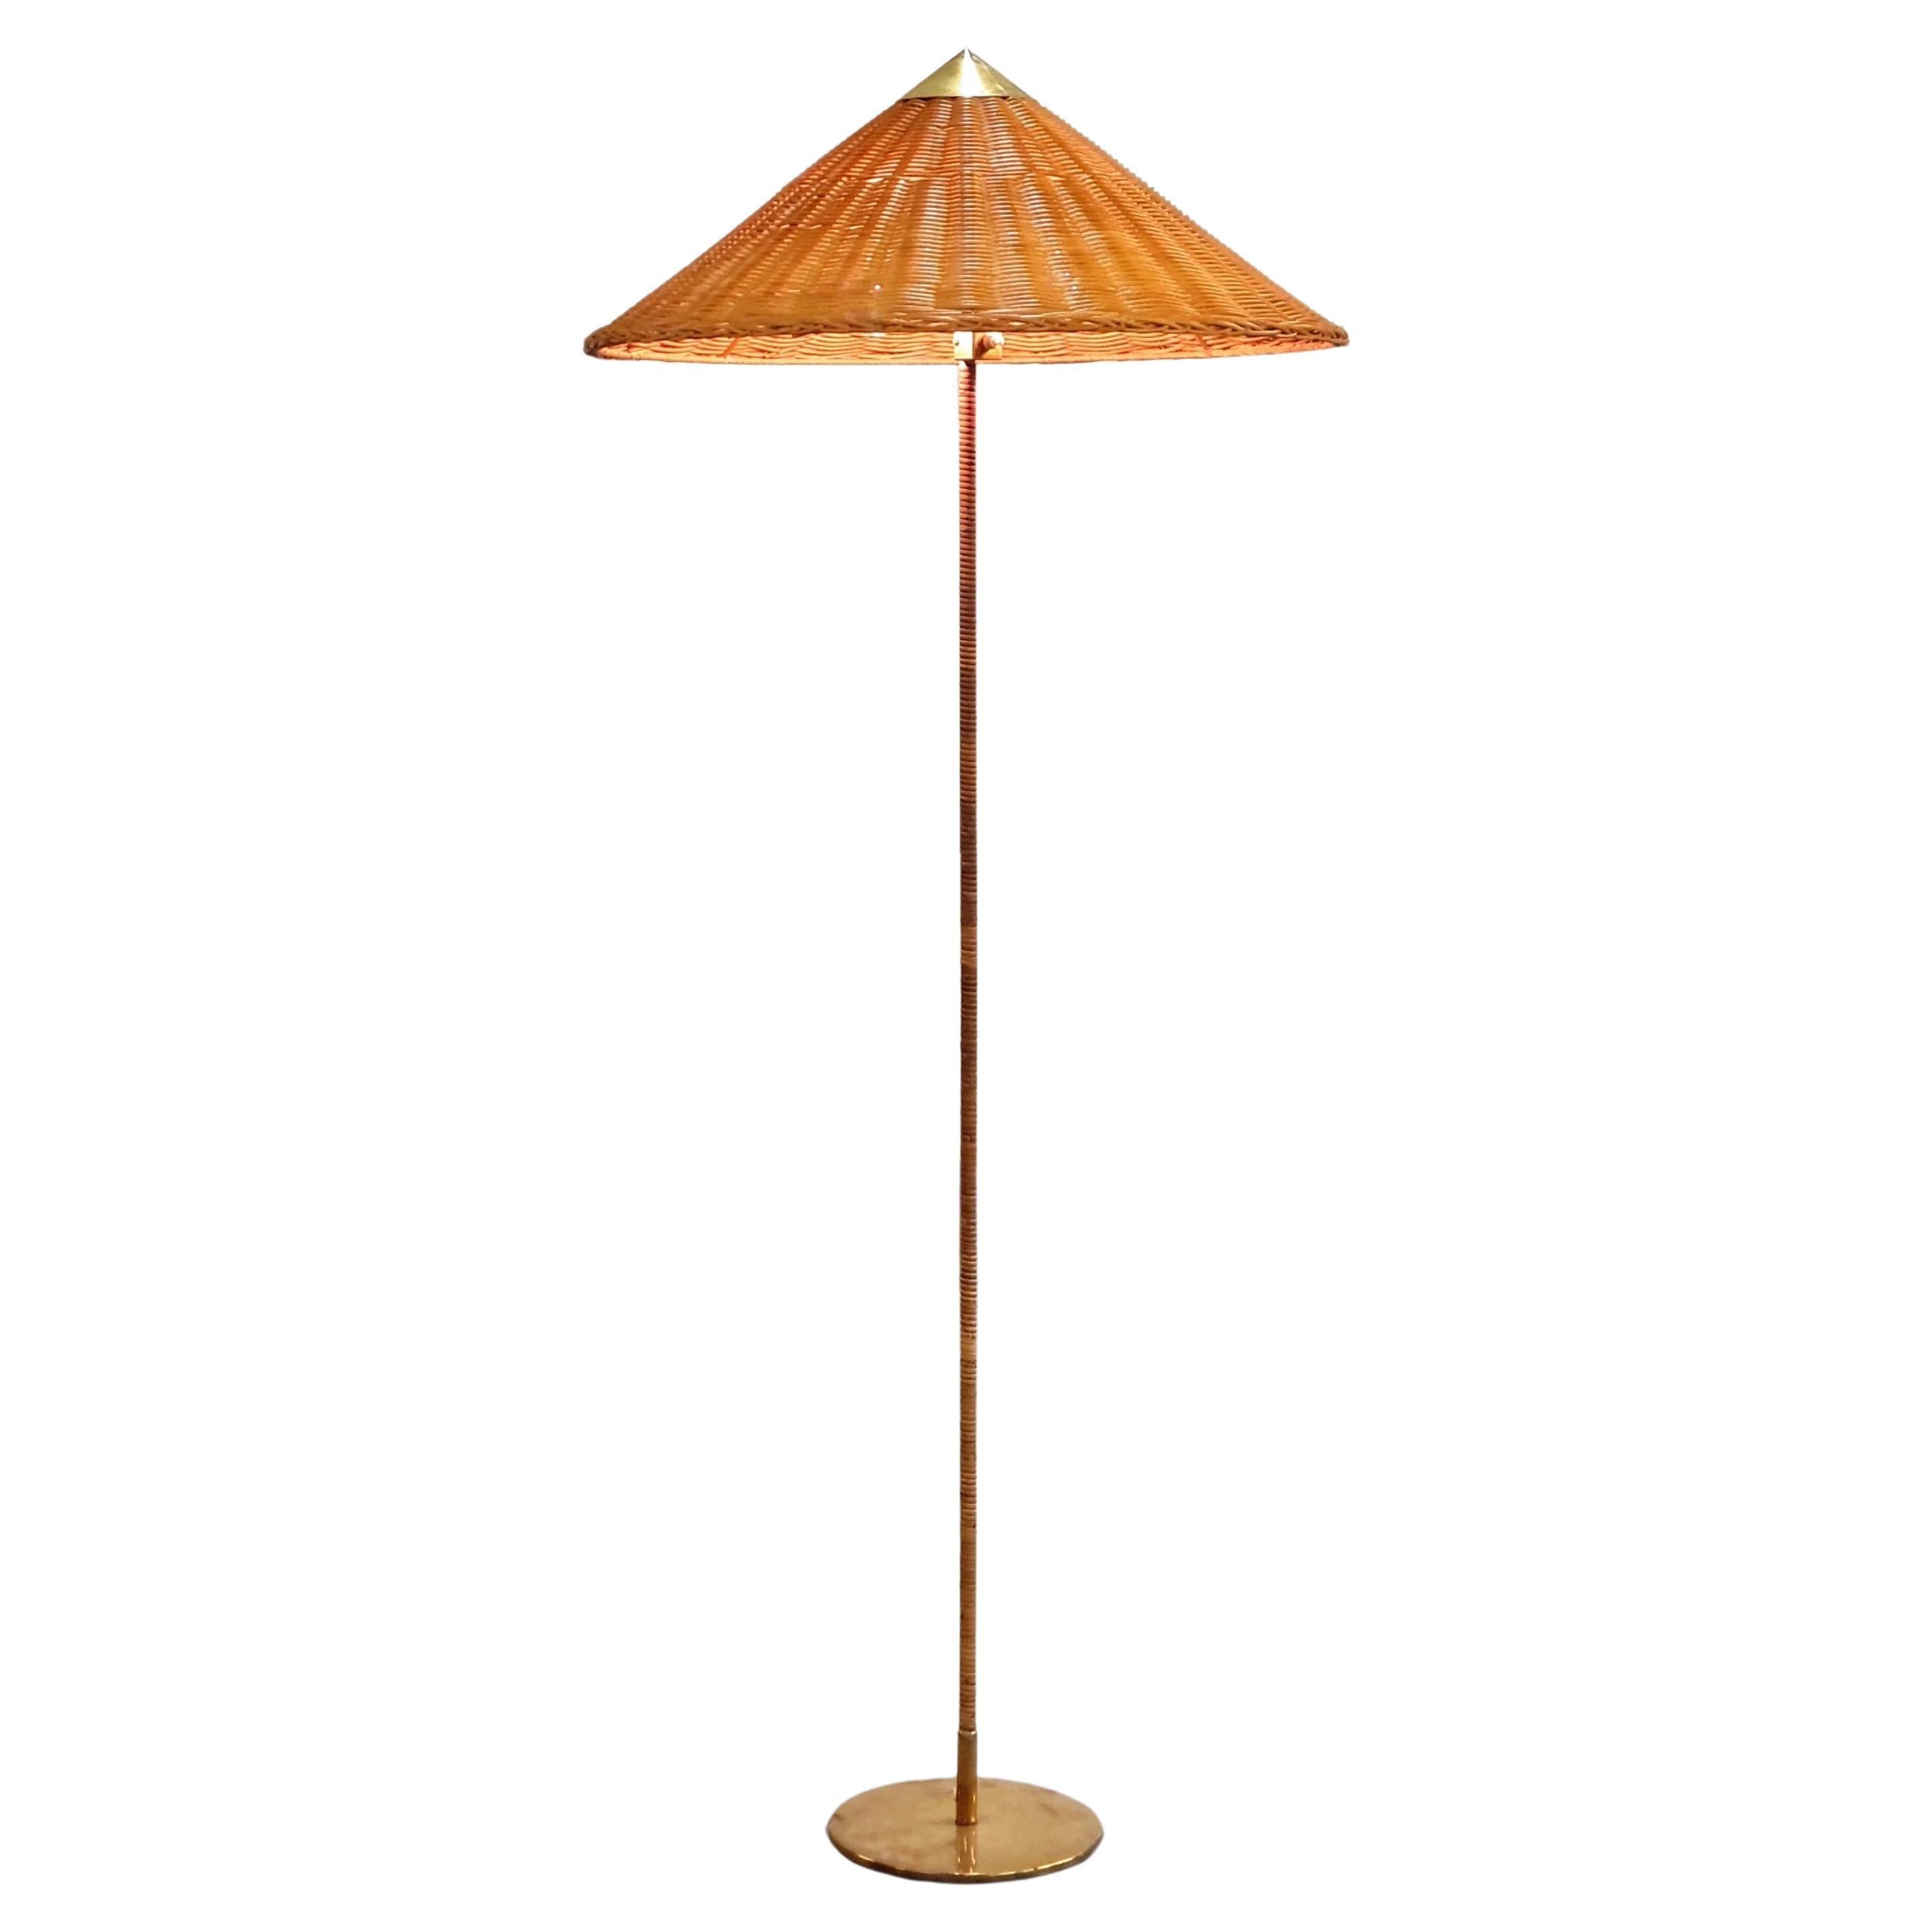 Paavo Tynell "Chinese Hat" Floor Lamp 9602, Taito 1940s